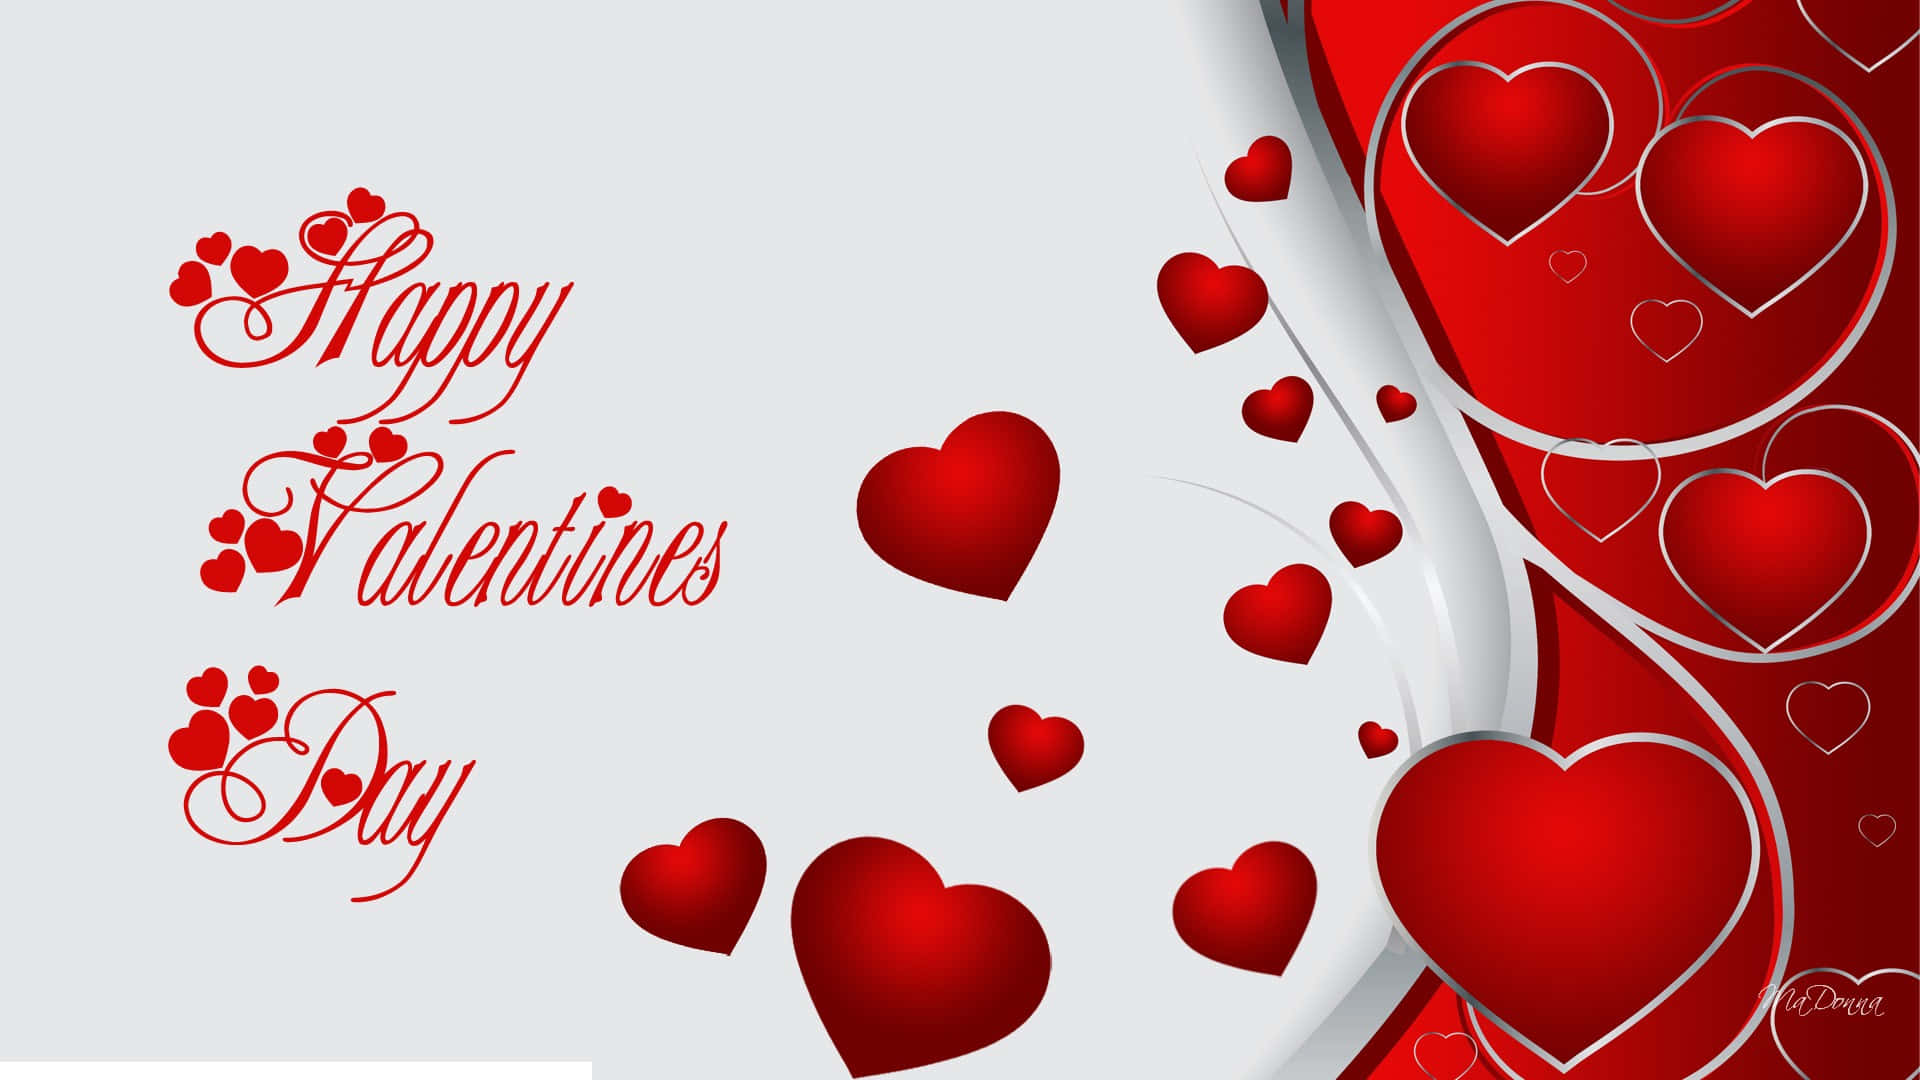 Happy Valentines Day Card Digital Download Romantic love Clipart Swirly  Script Love Message